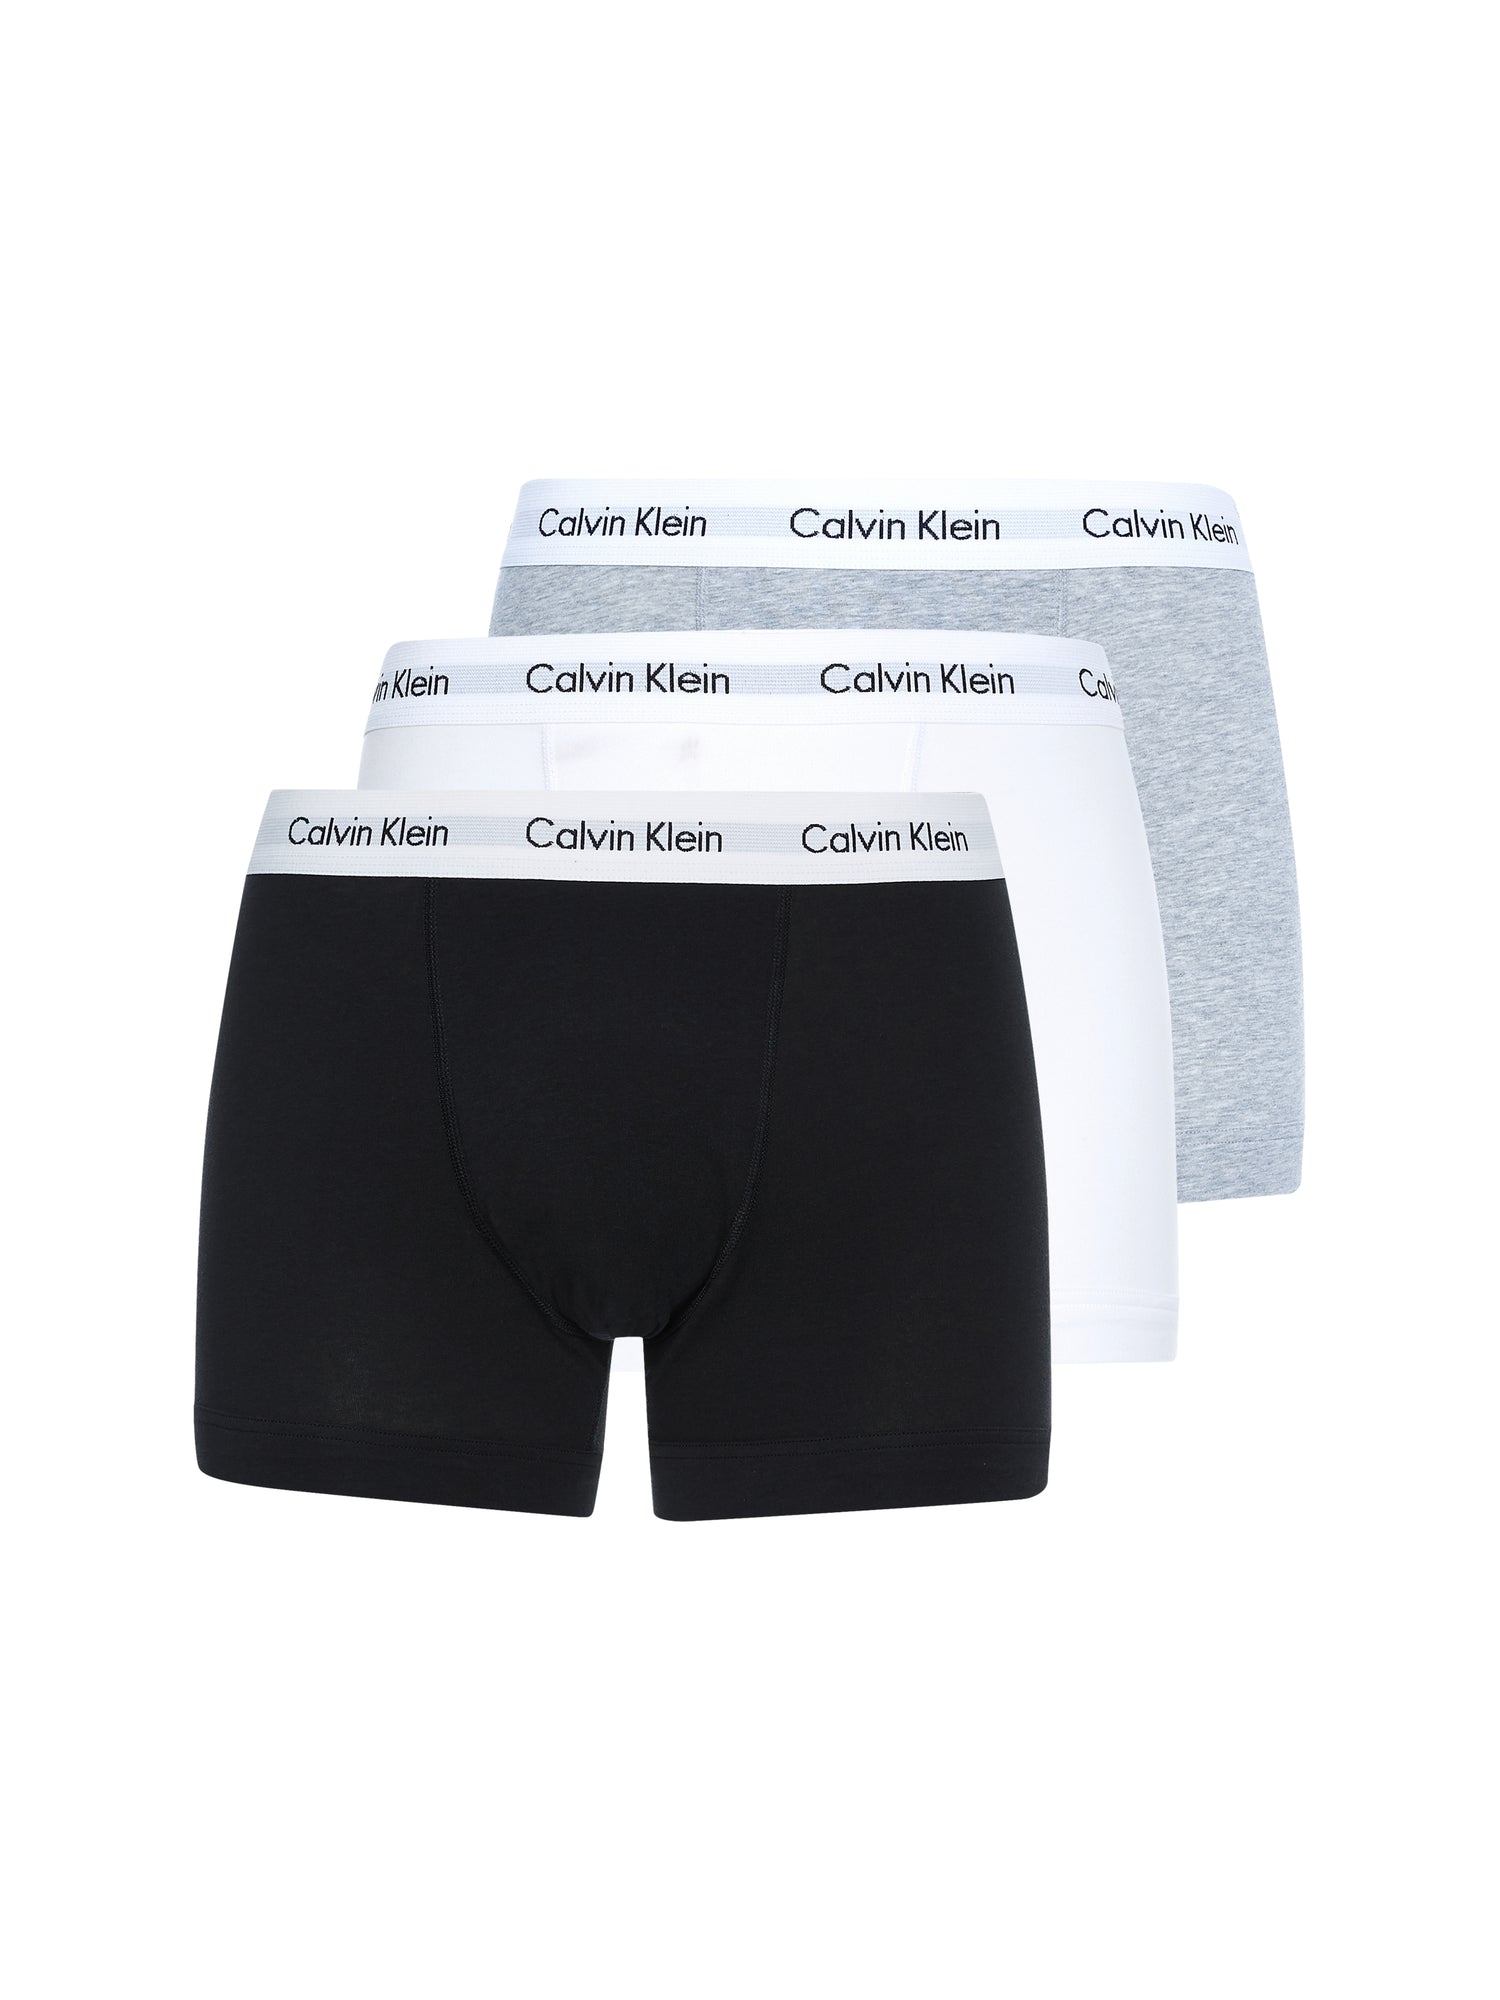 Calvin Klein 3 Pack Men's Cotton Stretch Trunks